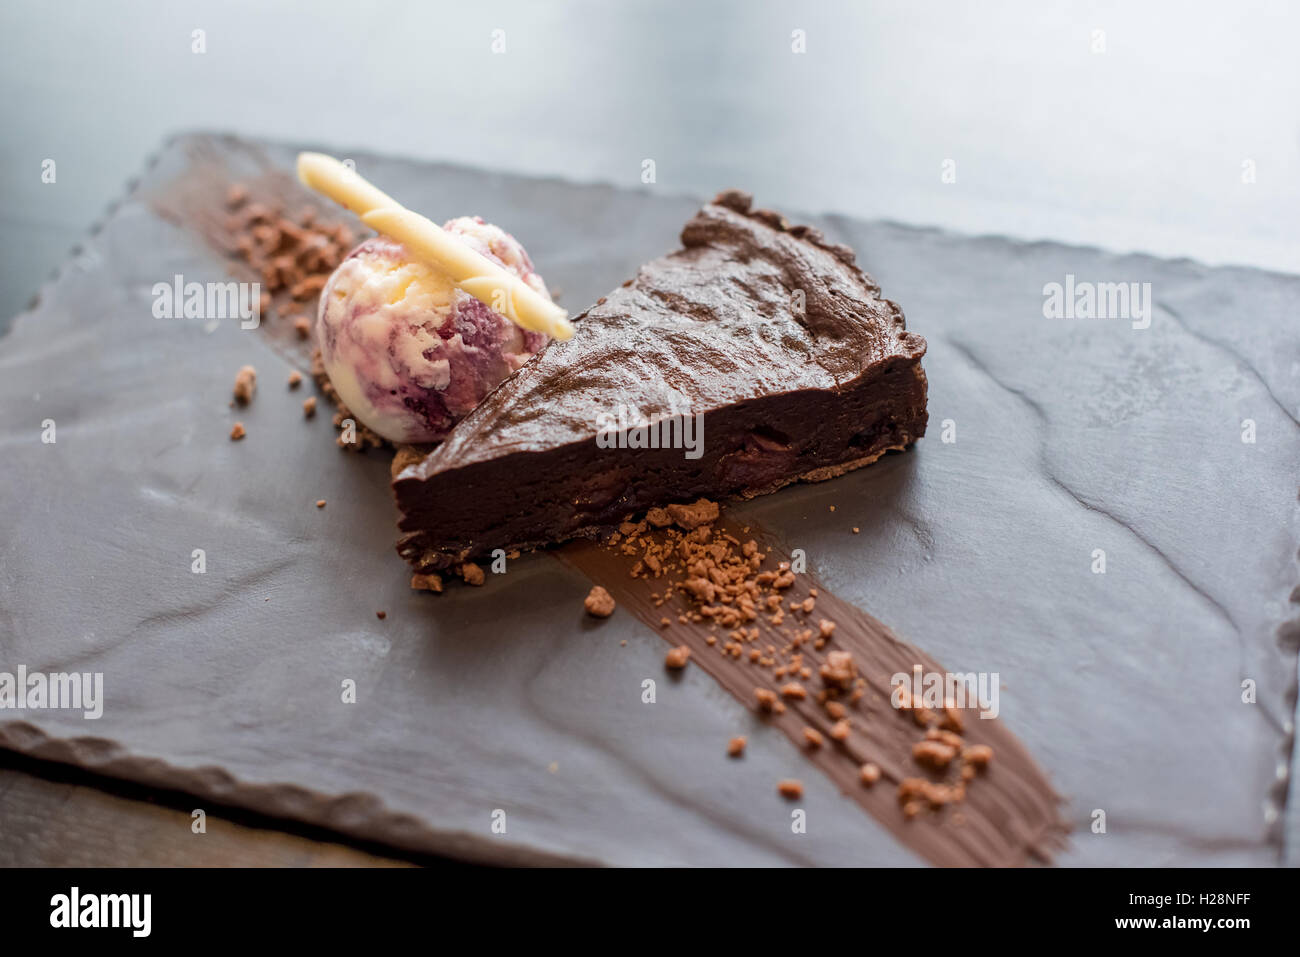 Chocolate cake and ice cream on a slate plate Stock Photo